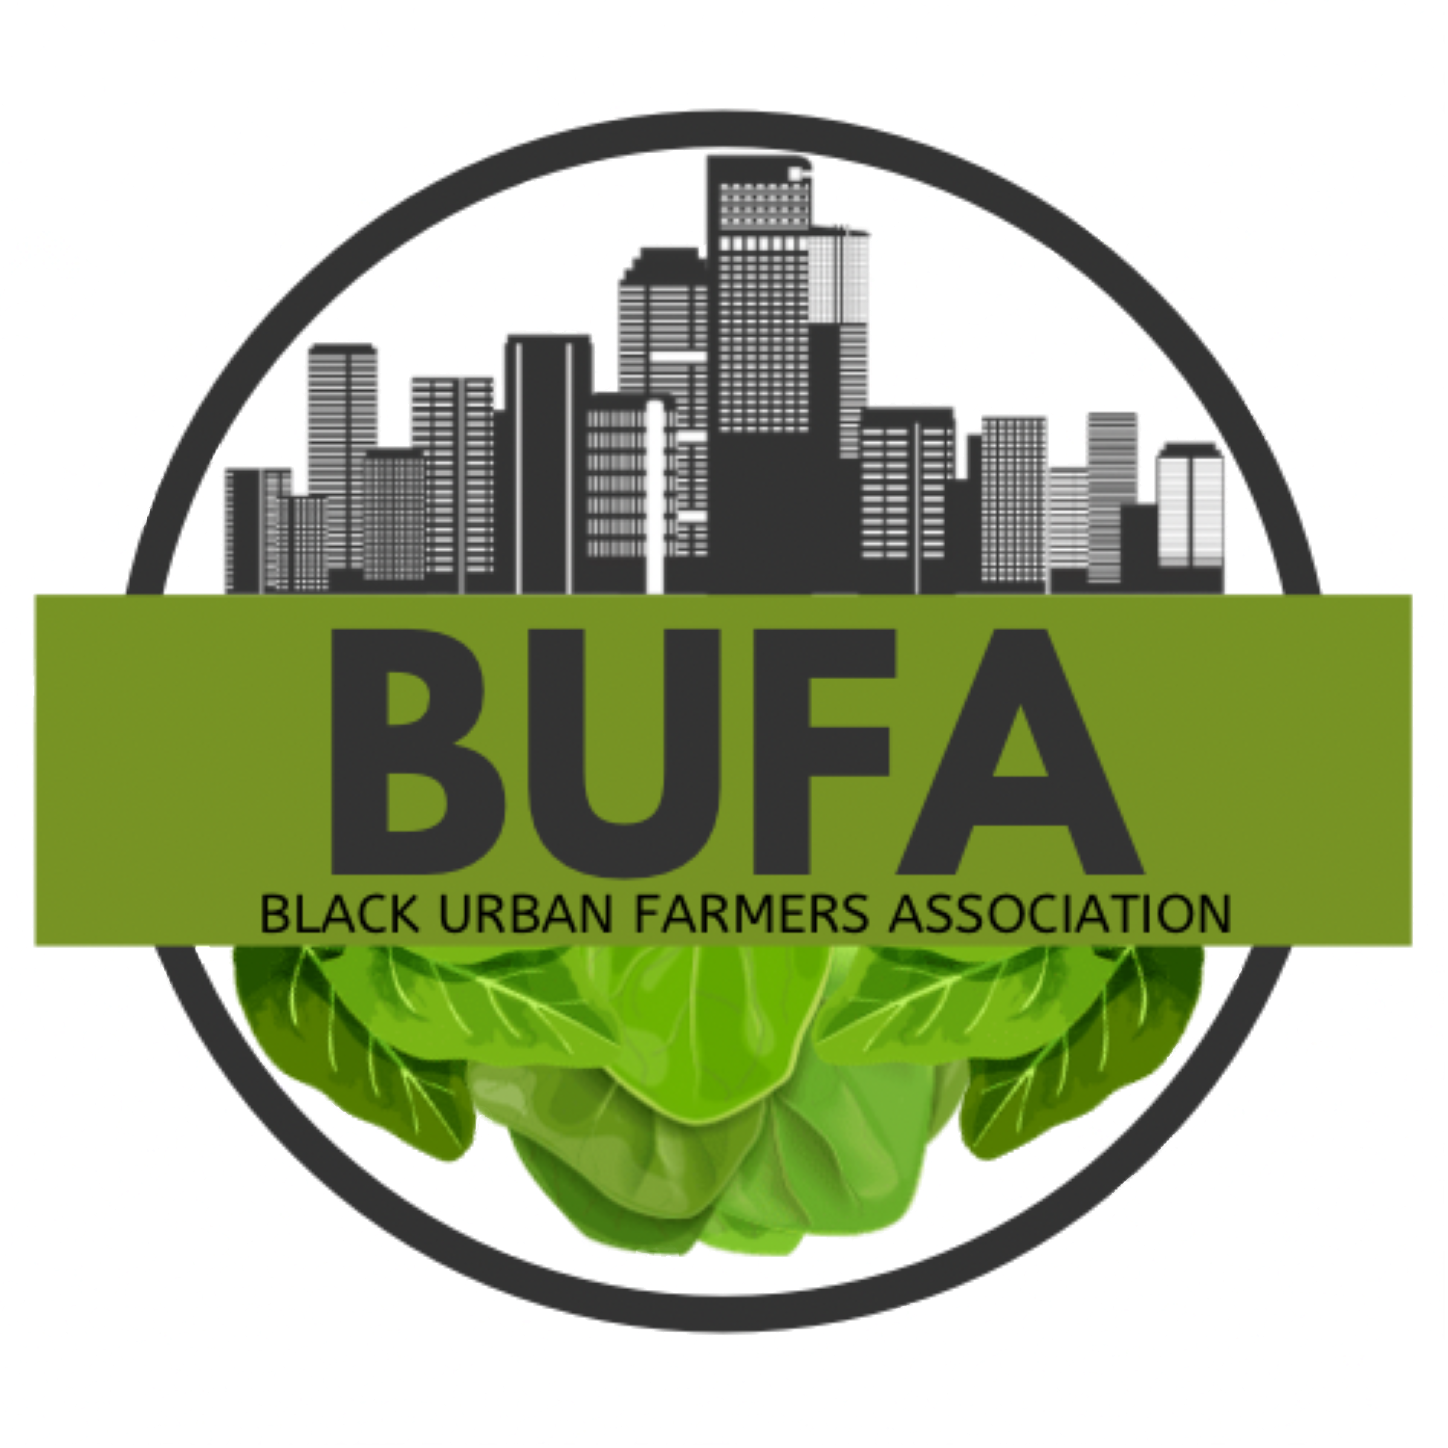 BLACK URBAN FARMERS ASSOCIATION